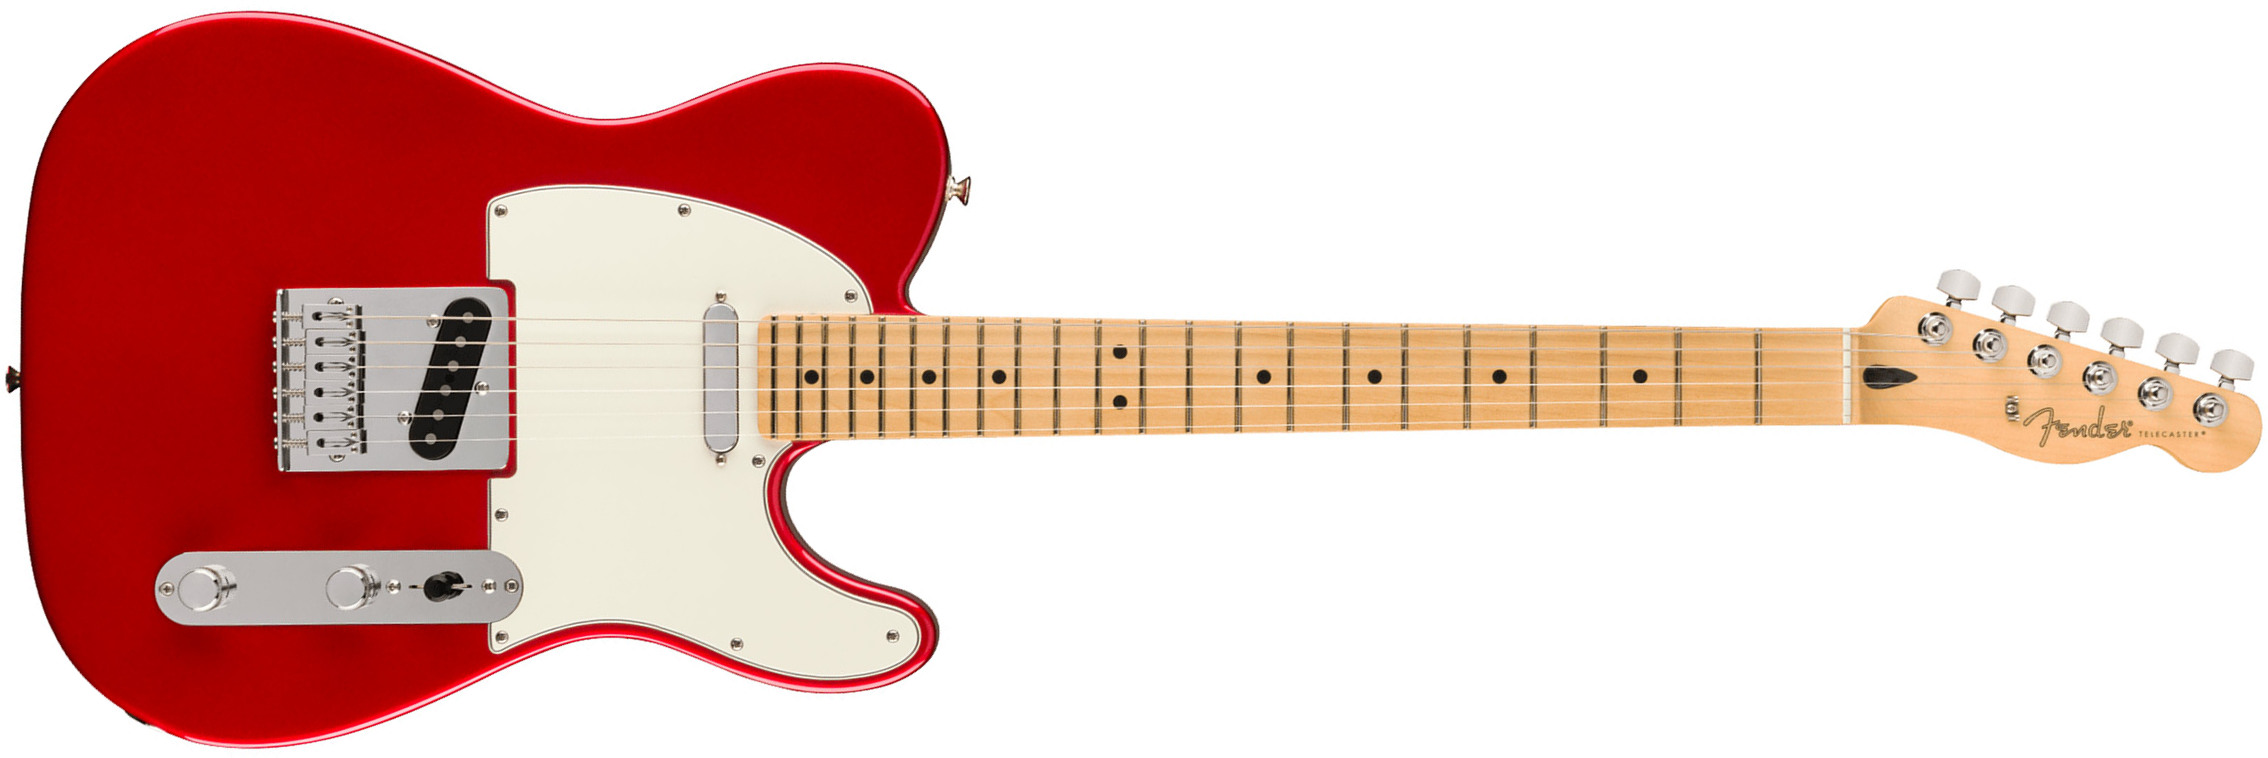 Fender Tele Player Mex 2023 2s Ht Mn - Candy Apple Red - Televorm elektrische gitaar - Main picture